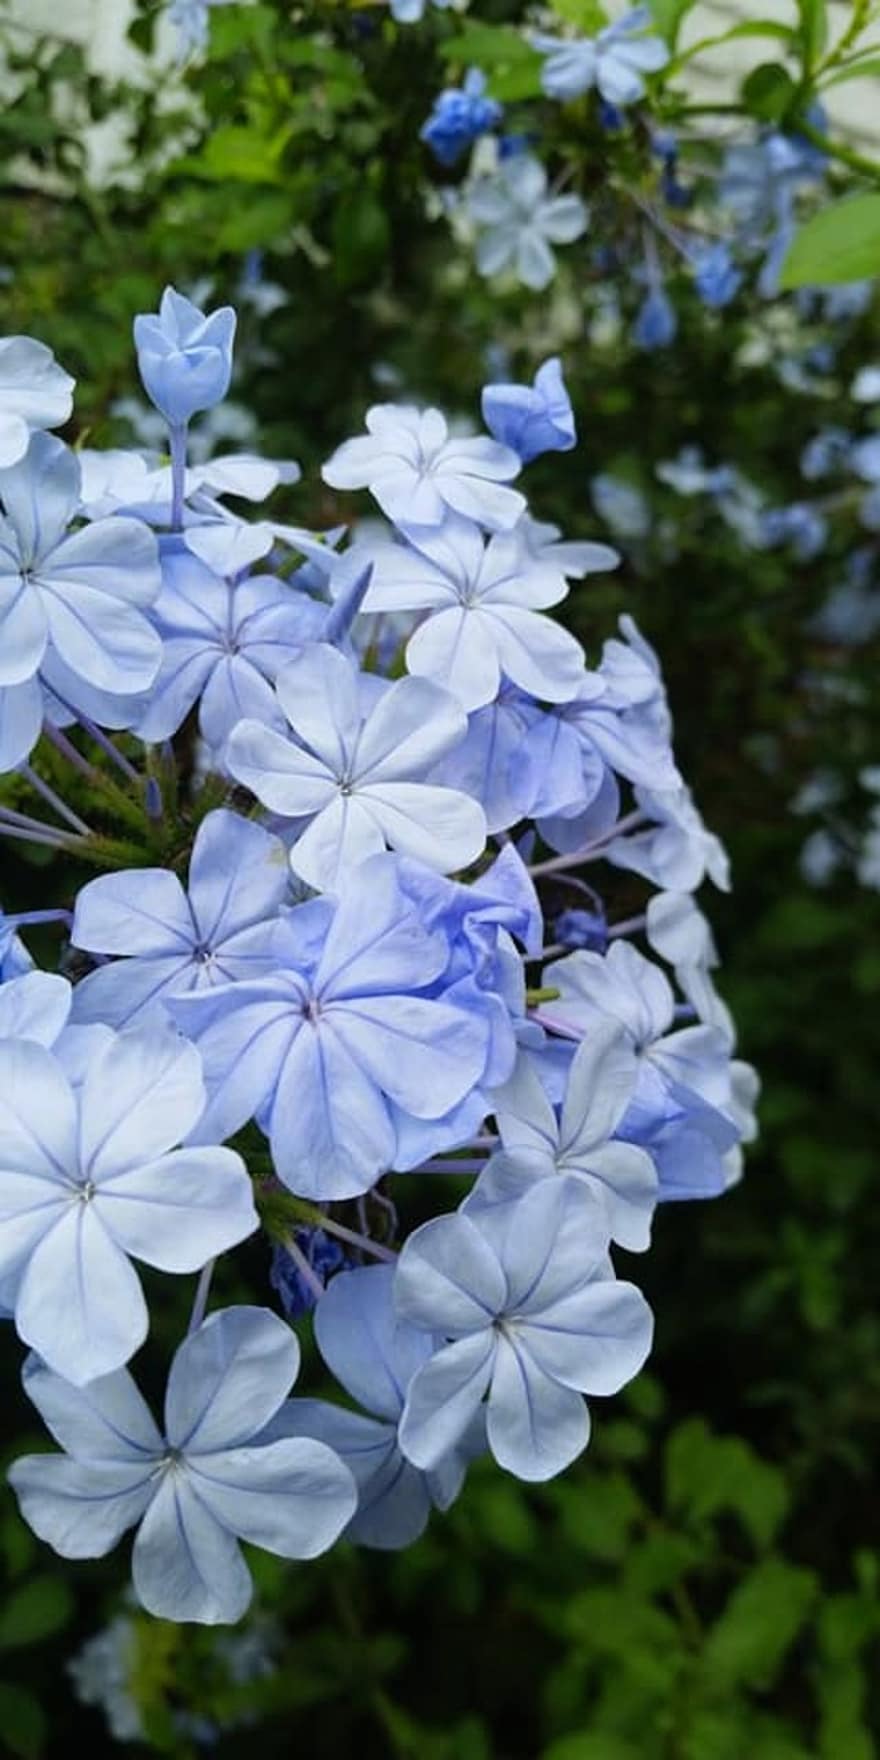 cape leadwort, bunga-bunga, menanam, plumbago biru, bunga biru, kelopak, berkembang, musim semi, taman, alam